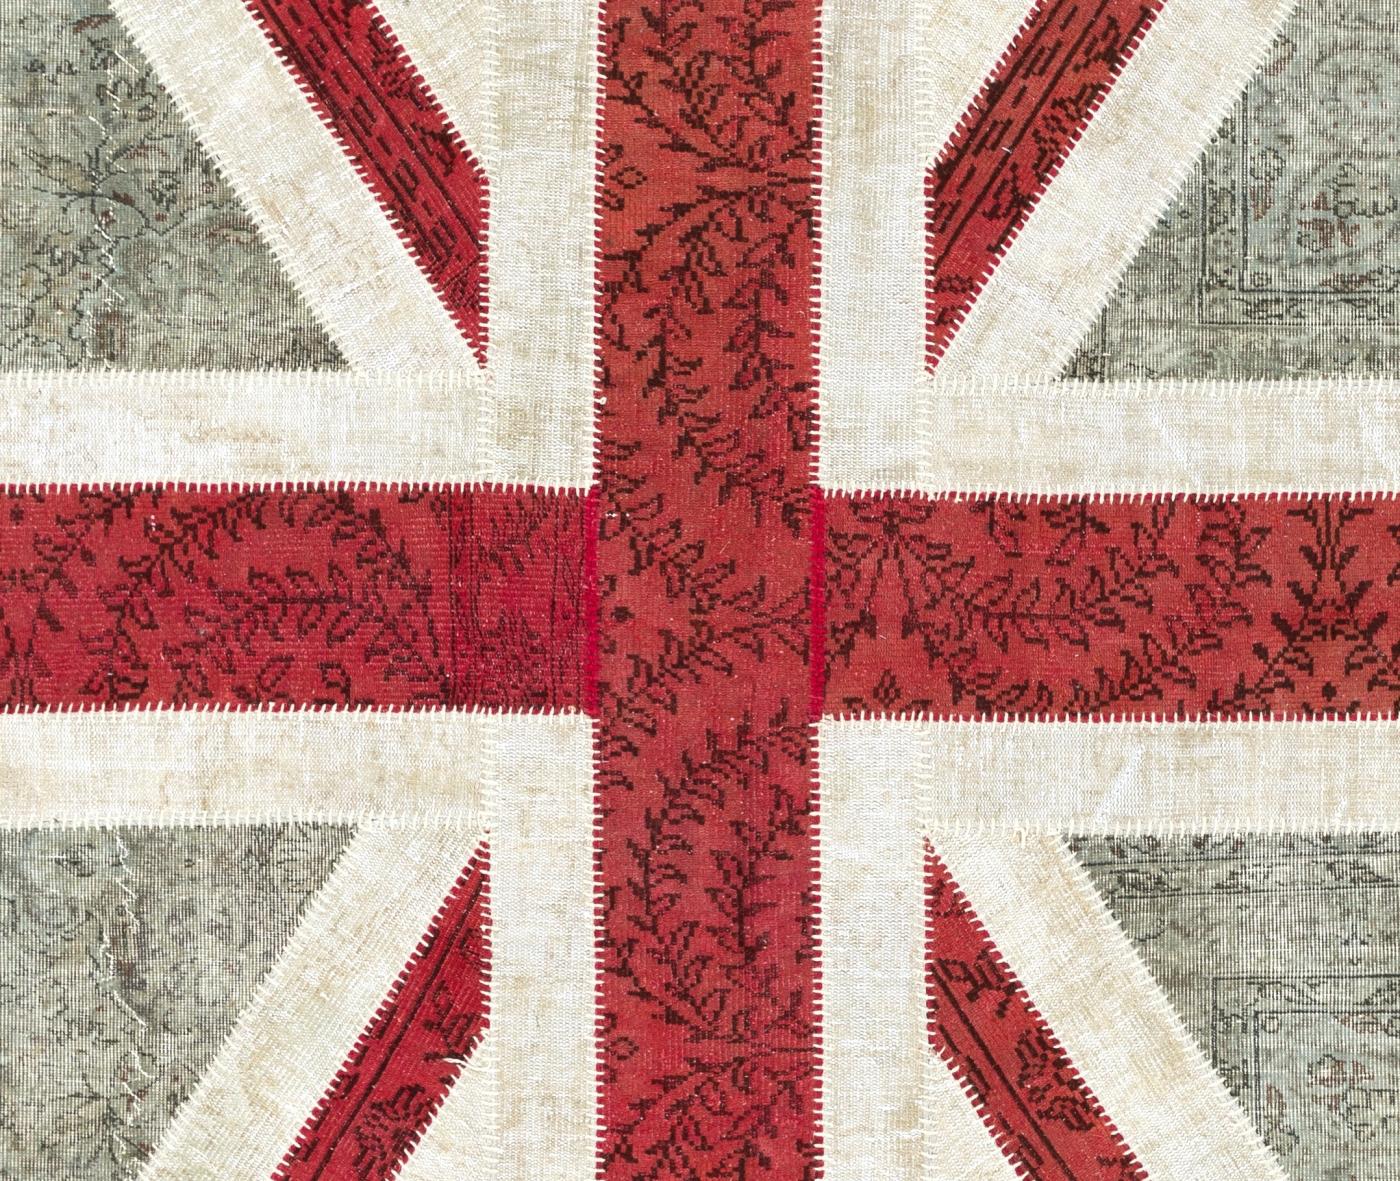 Union Jack British Flag design PATCHWORK RUG Handmade from OVERDYED old carpets 